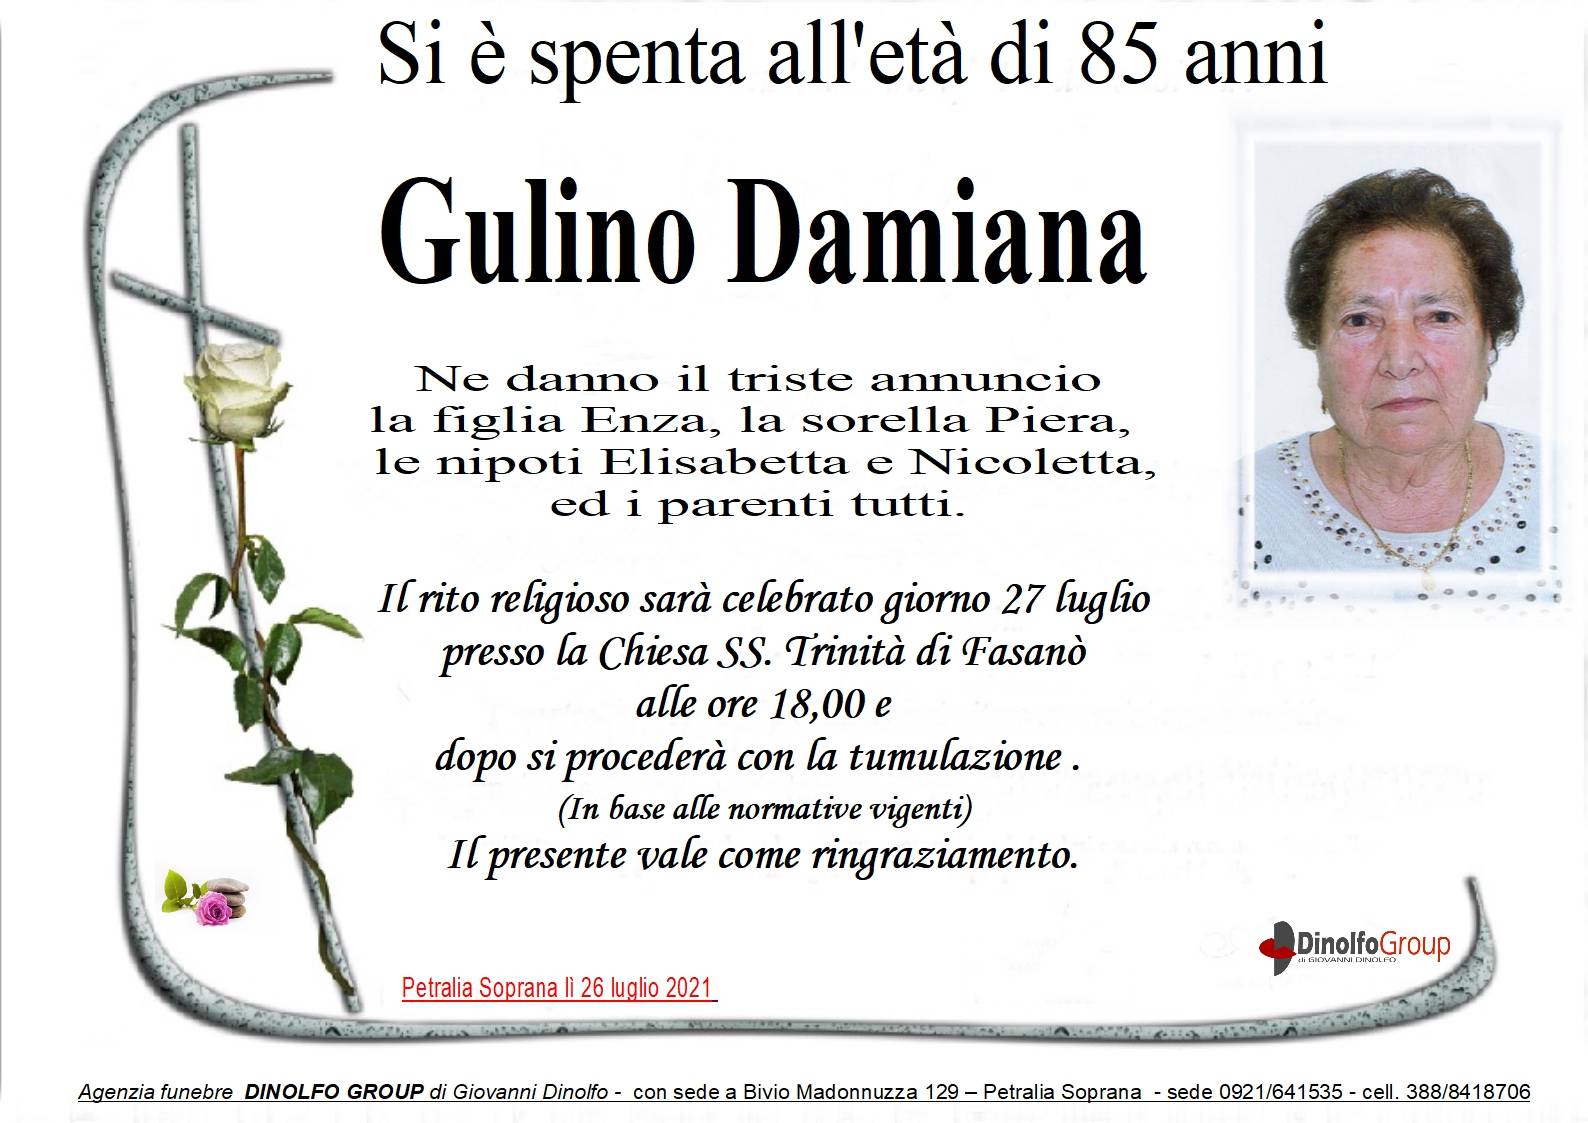 Damiana Gulino